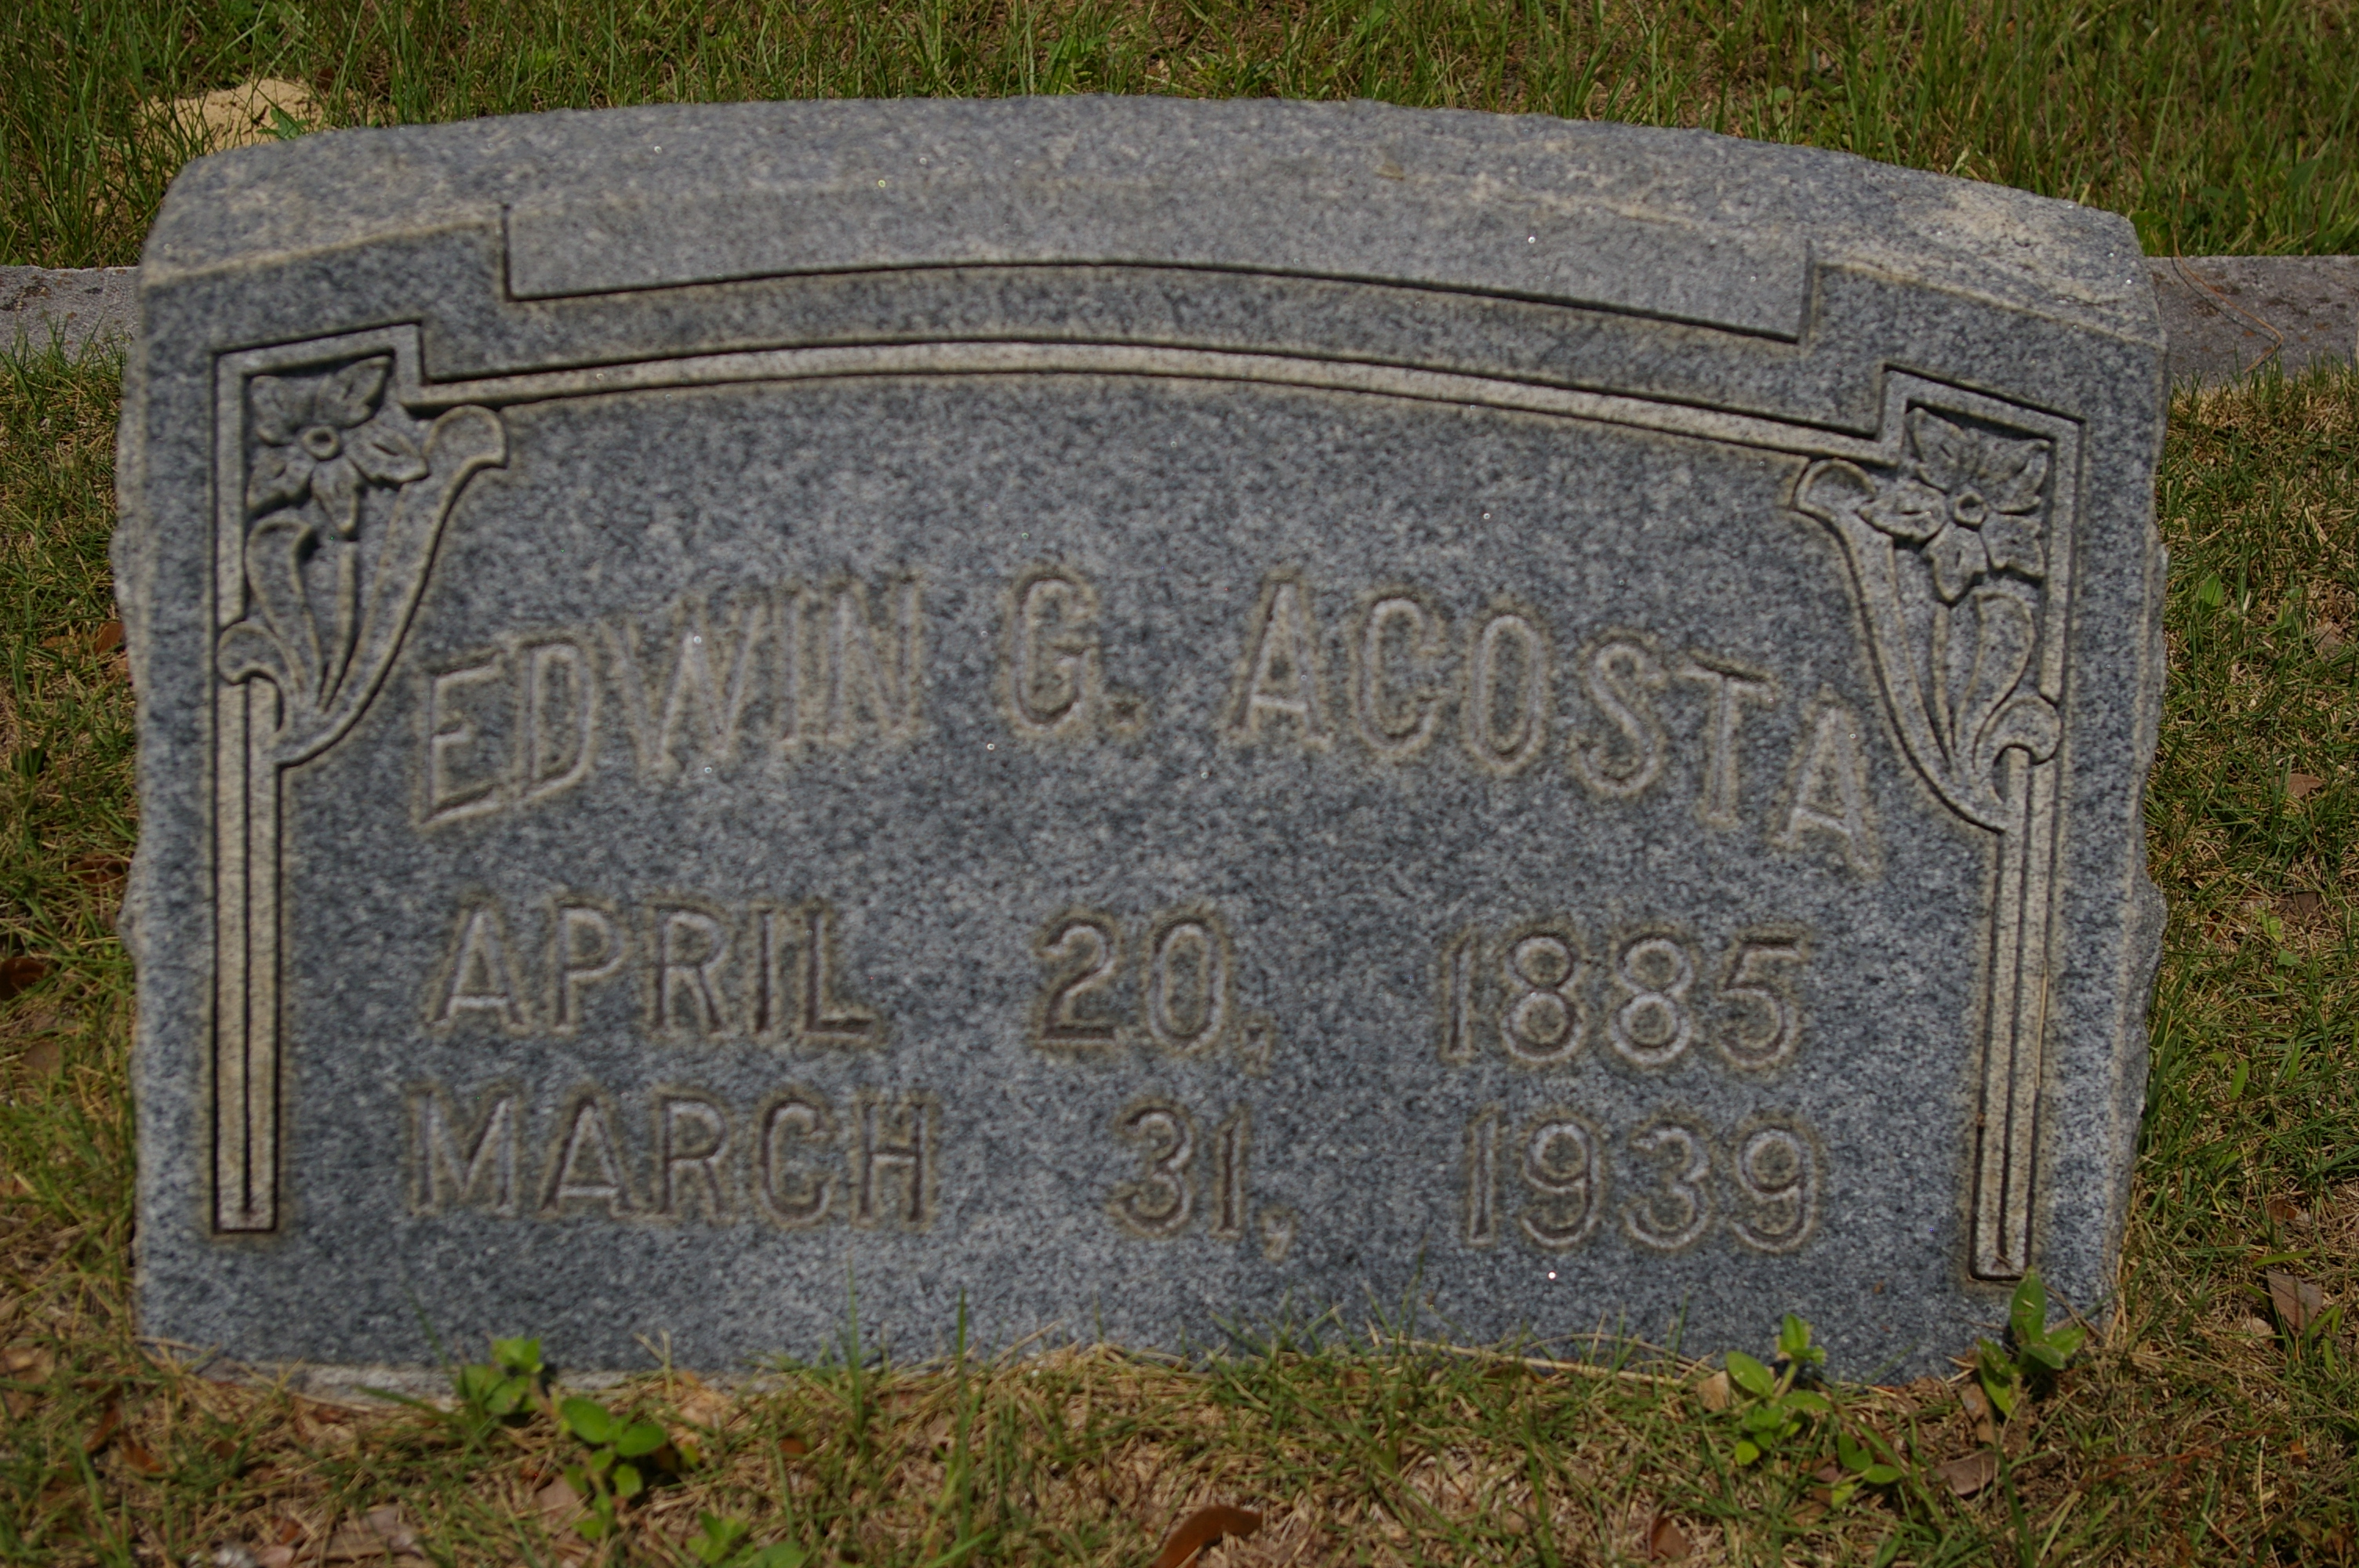 Edwin G. Acosta